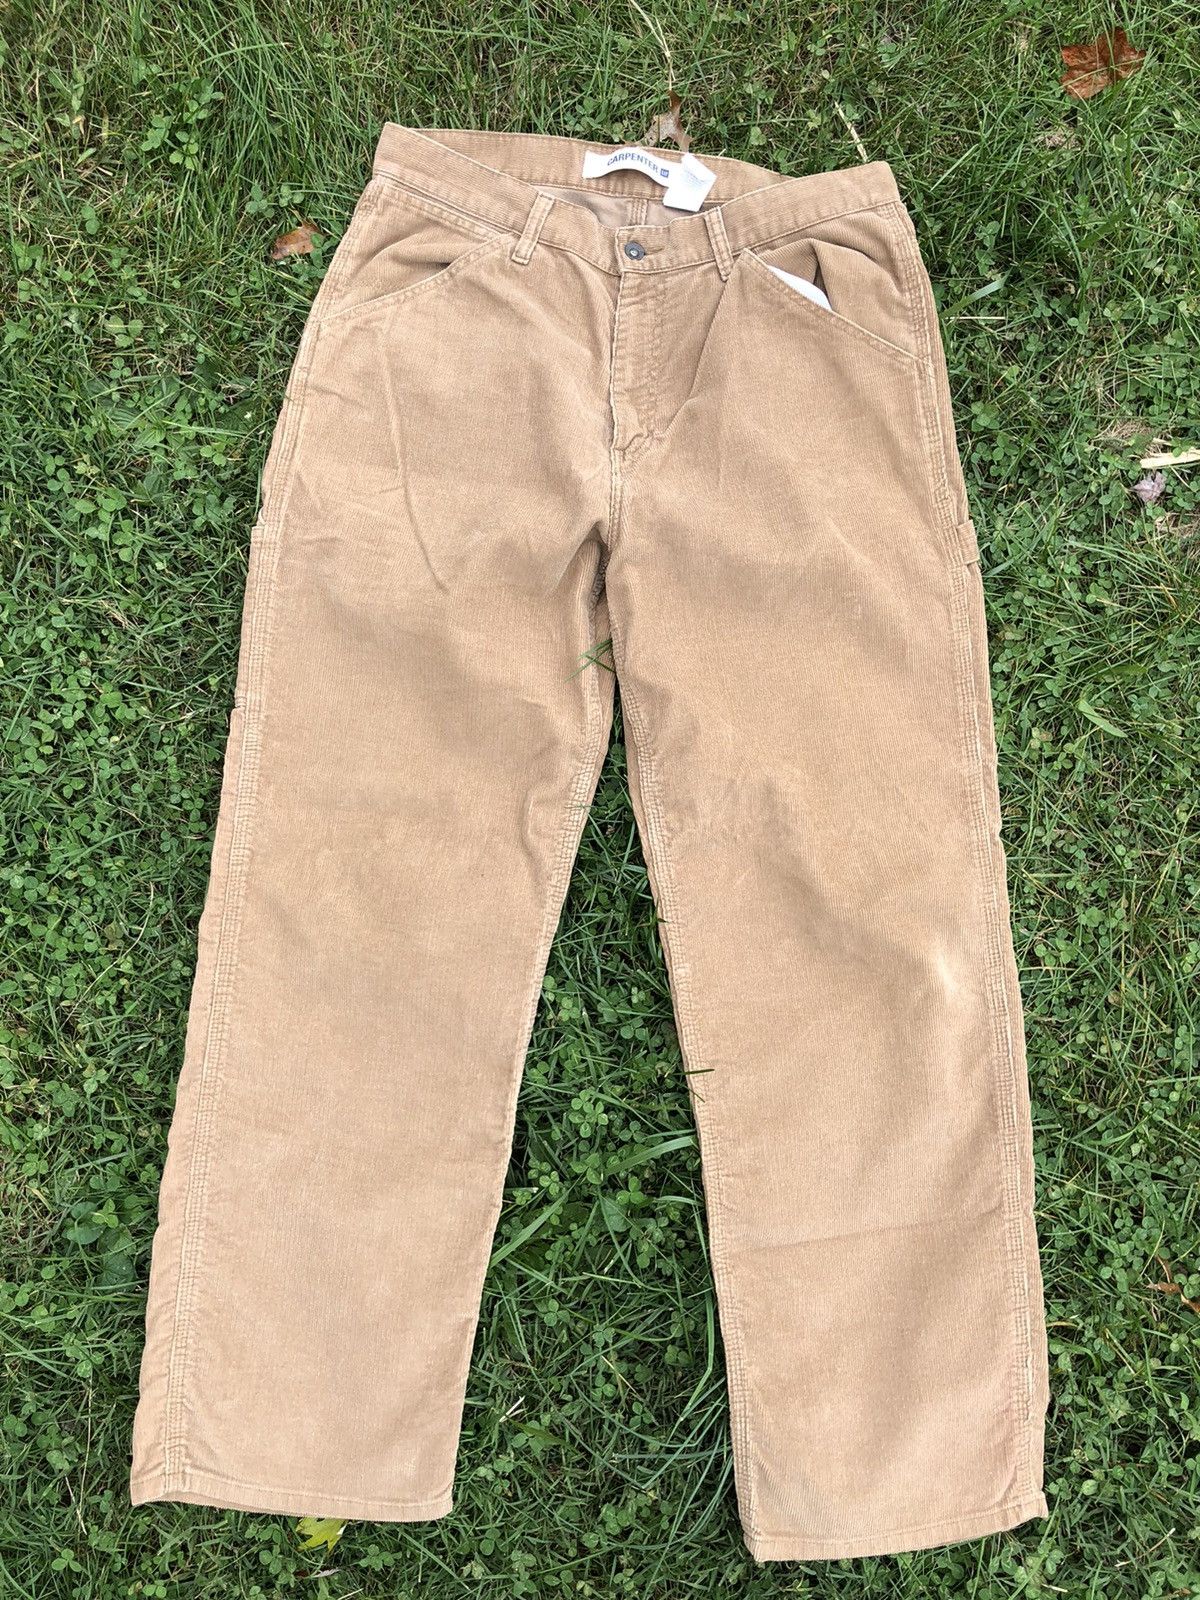 Vintage Gap Corduroy carpenter pants Size US 36 / EU 52 - 1 Preview